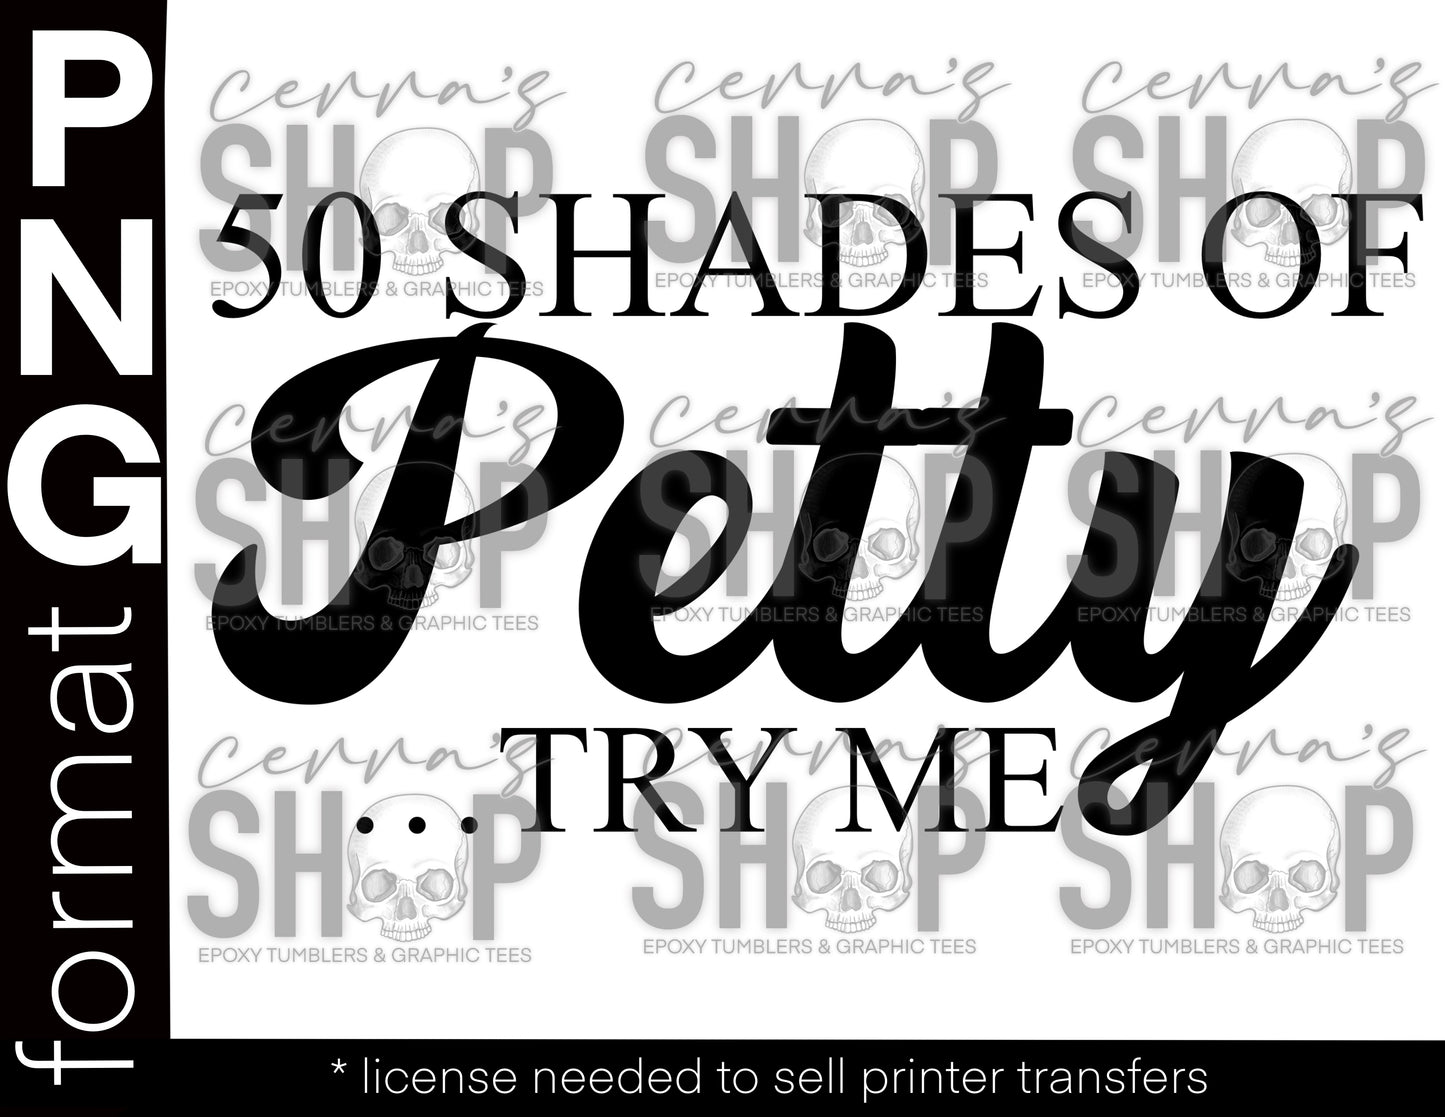 50 shades of petty  Cerra's Shop Creates   